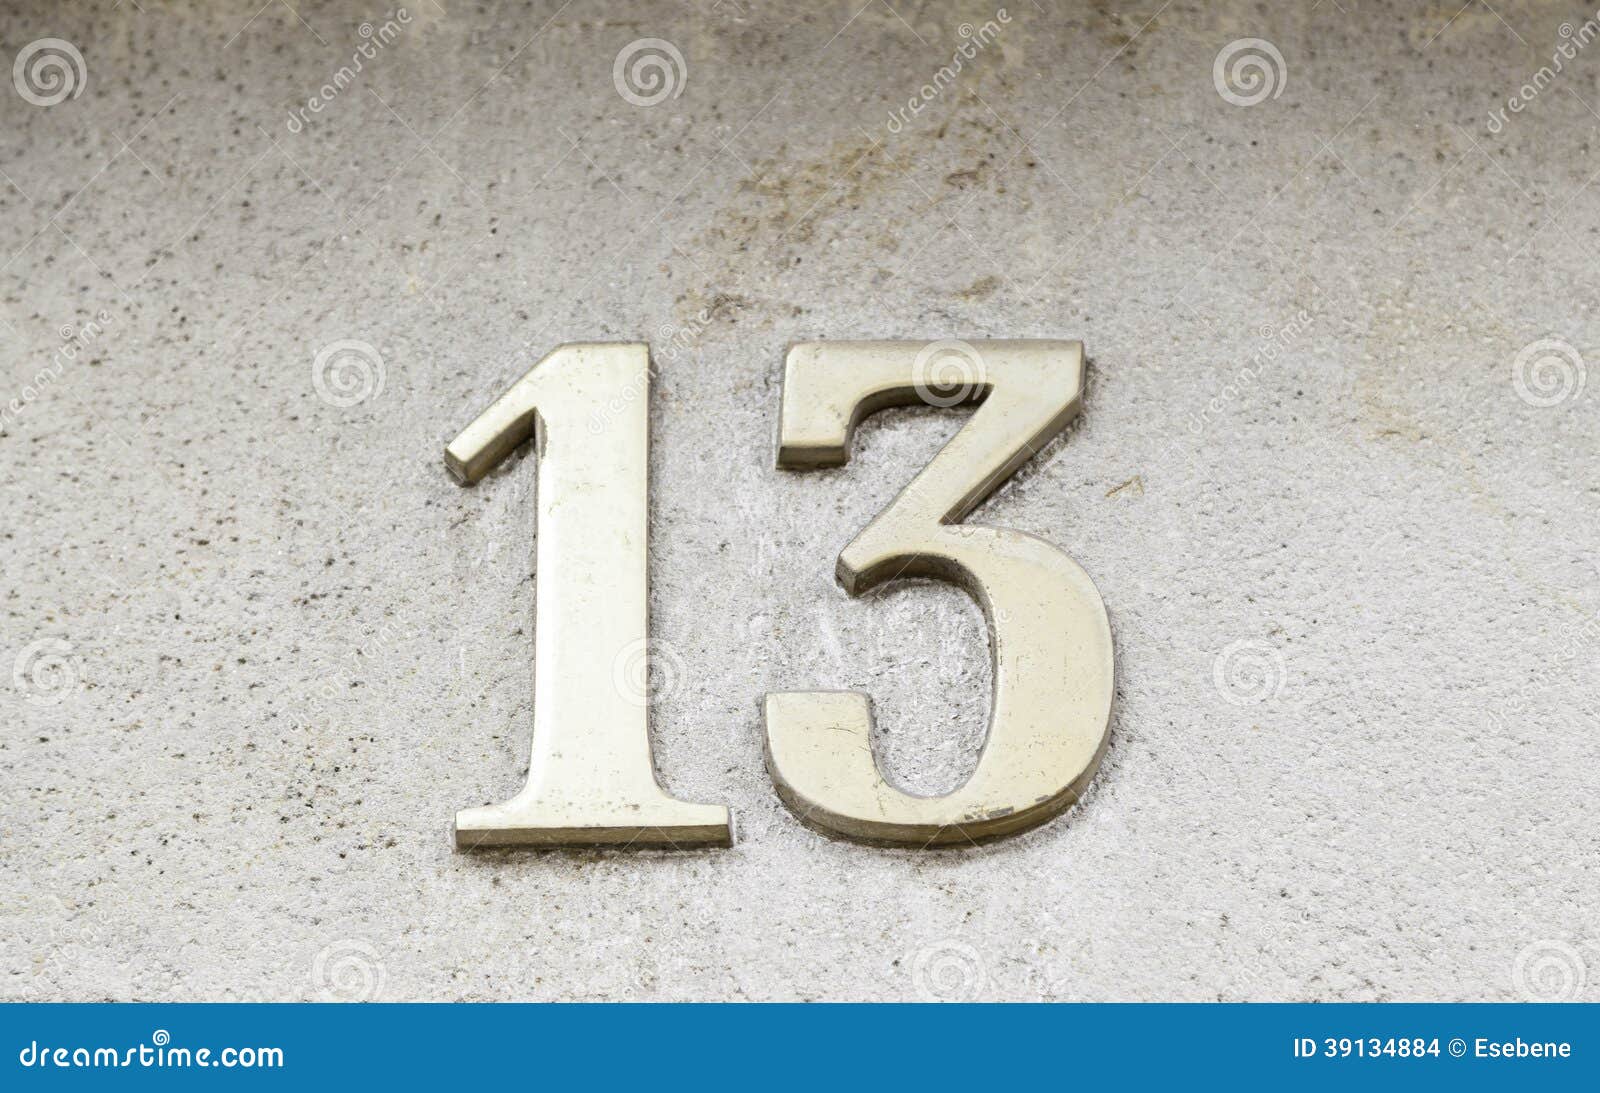 Цифра 104. Номер 13 фото. Обои с цифрой 13. Цифра 13 на стене. Цифра 13 номер дома.